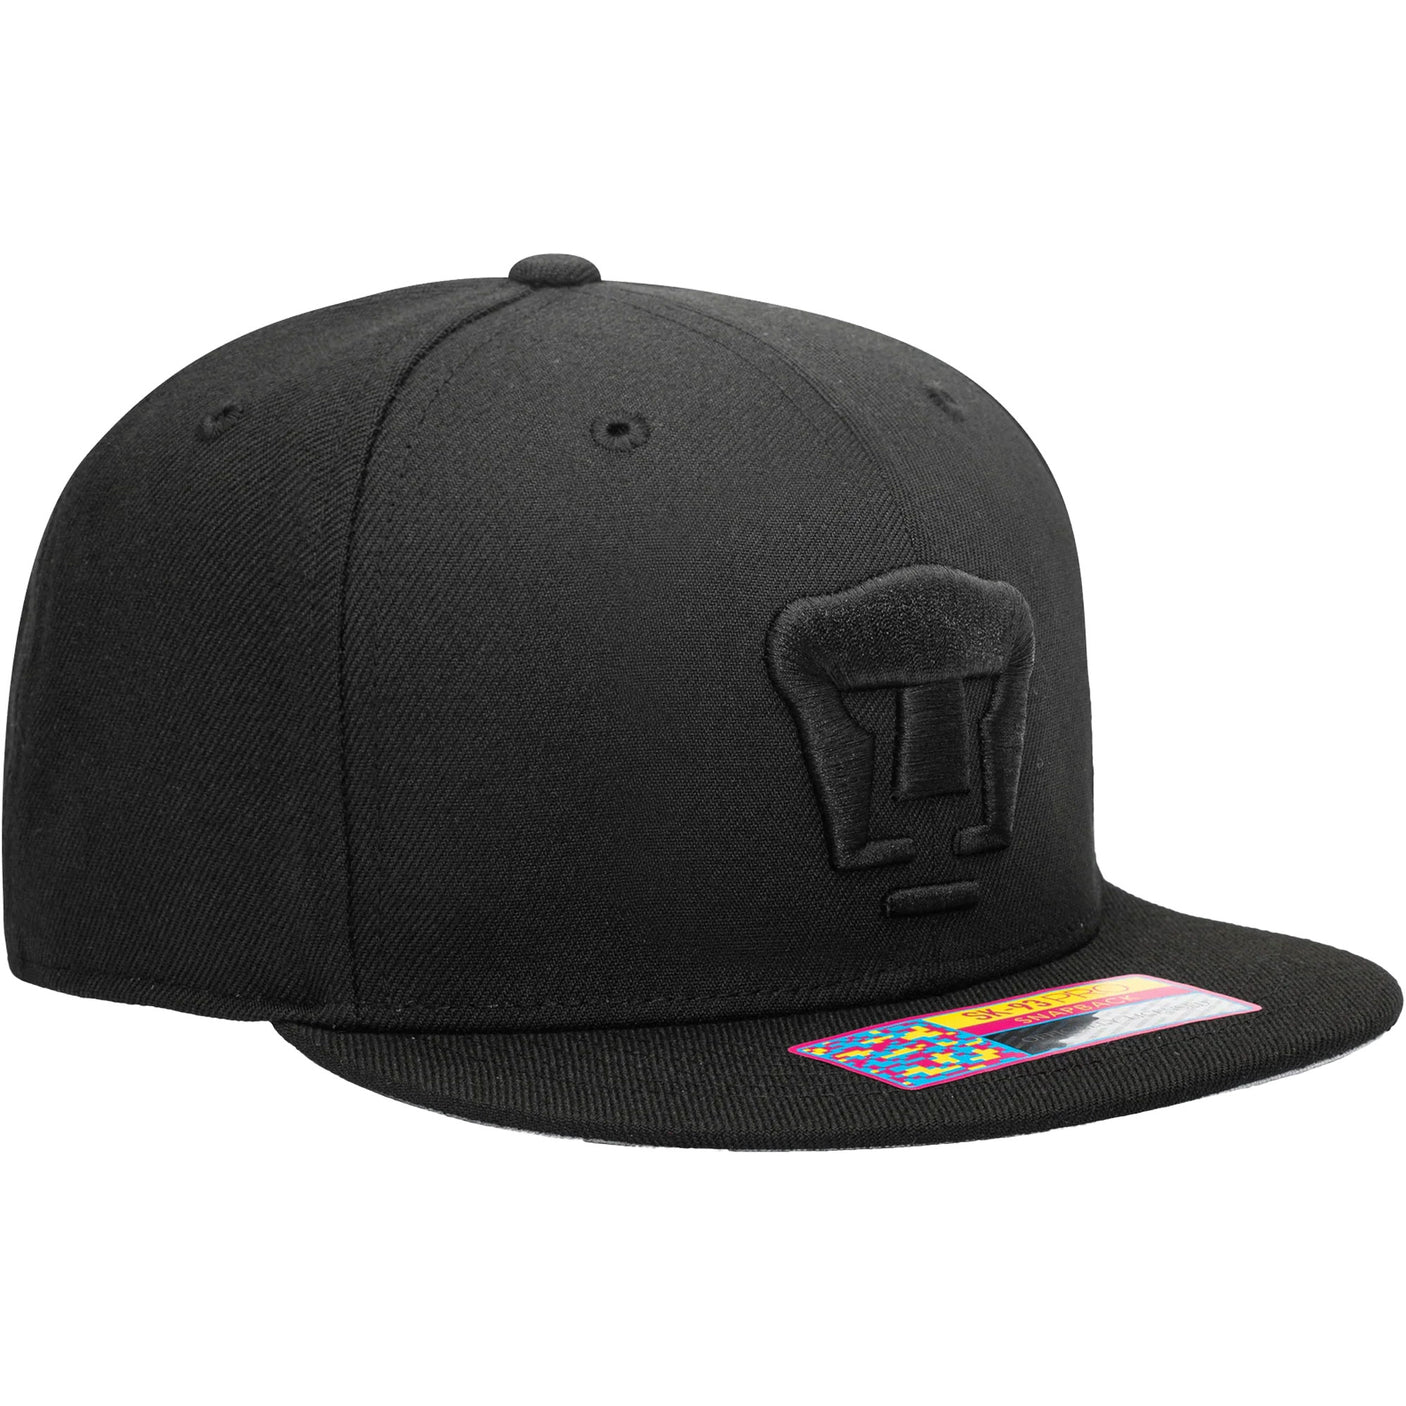 Fan Ink Pumas Dusk Snap Back Hat Black/Black Side